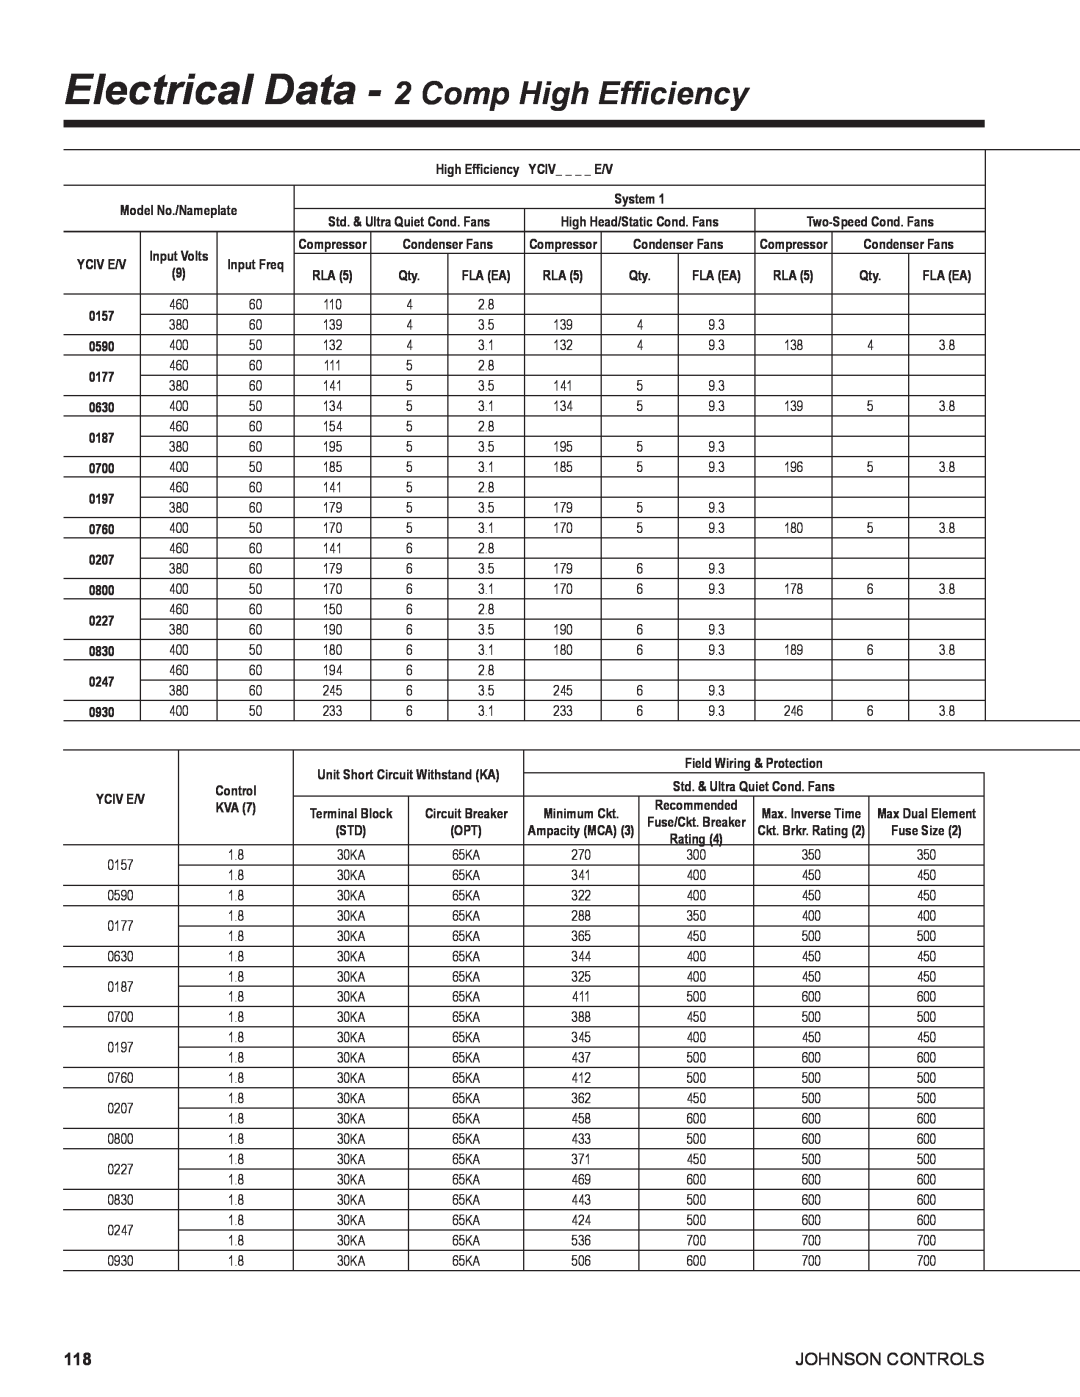 York R134A manual Electrical Data - 2 Comp High Efficiency, Johnson Controls 